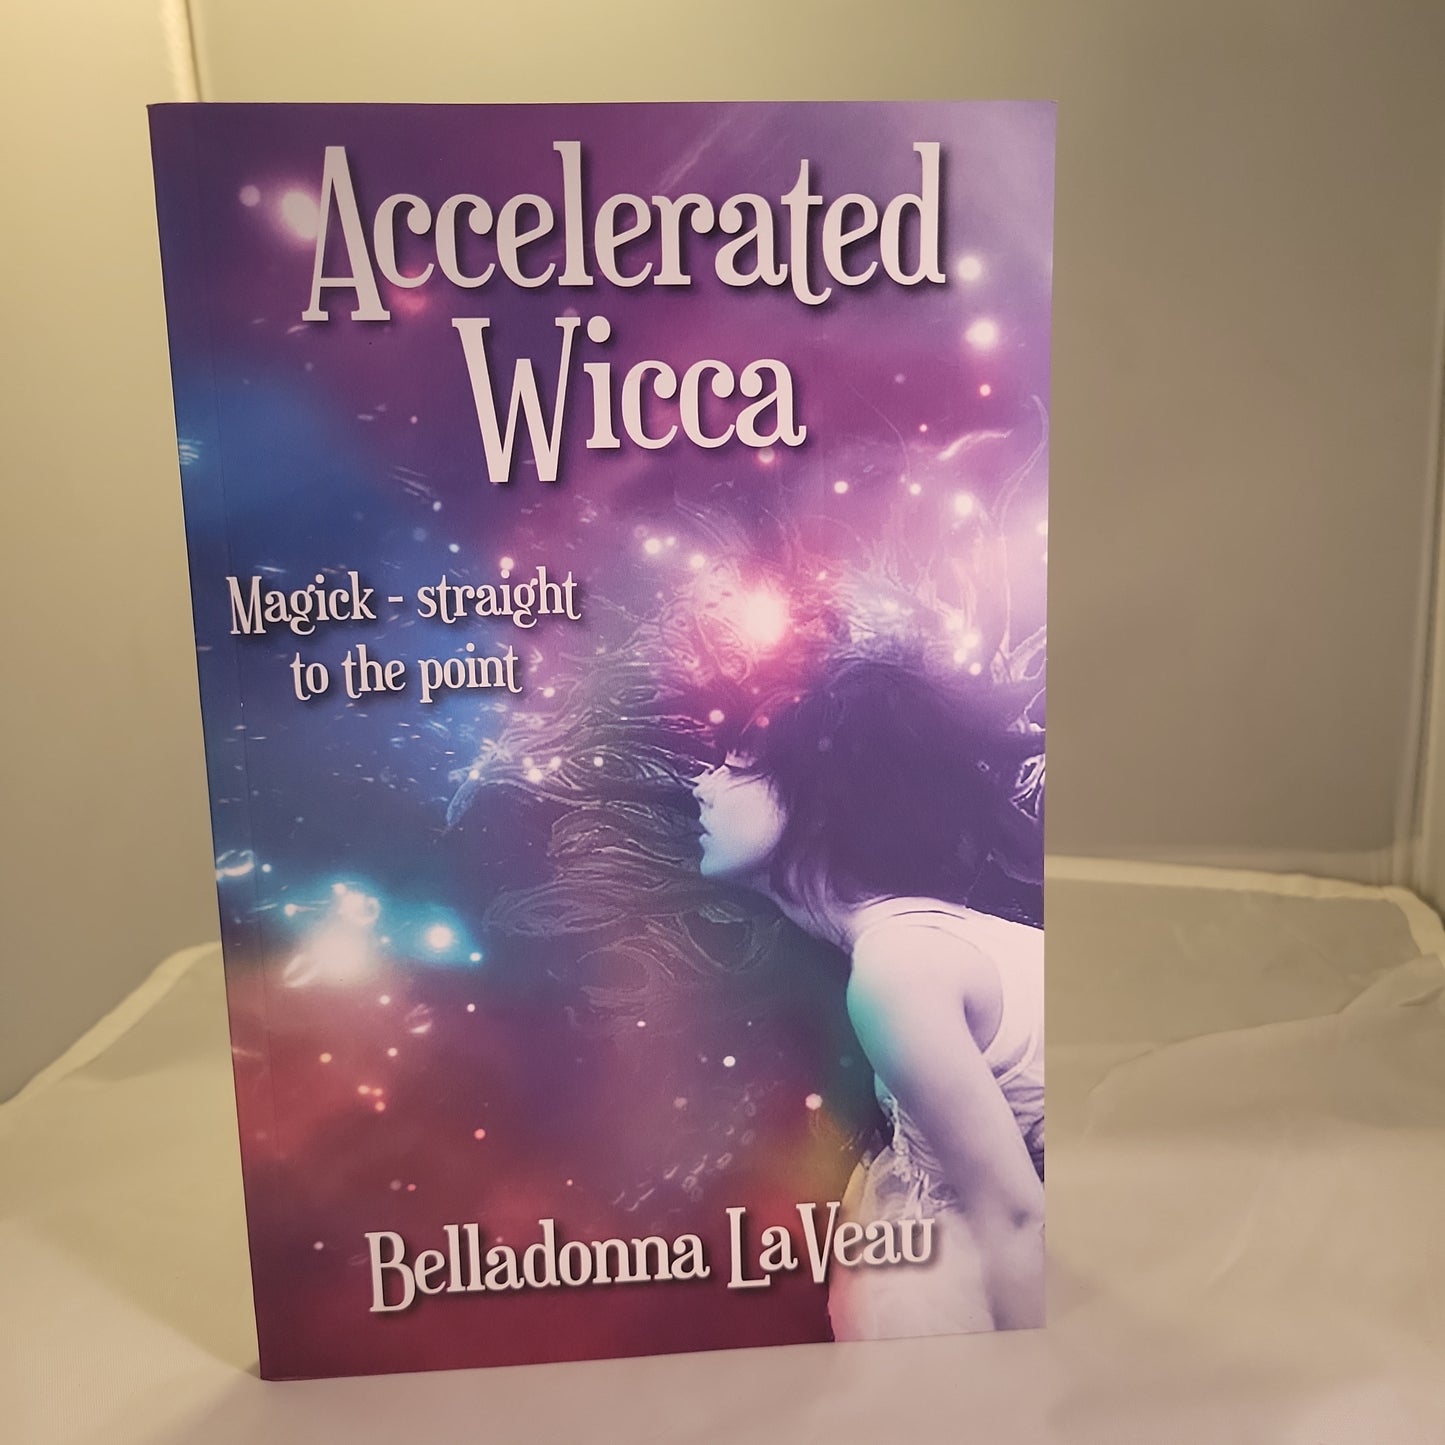 Accelerated Wicca